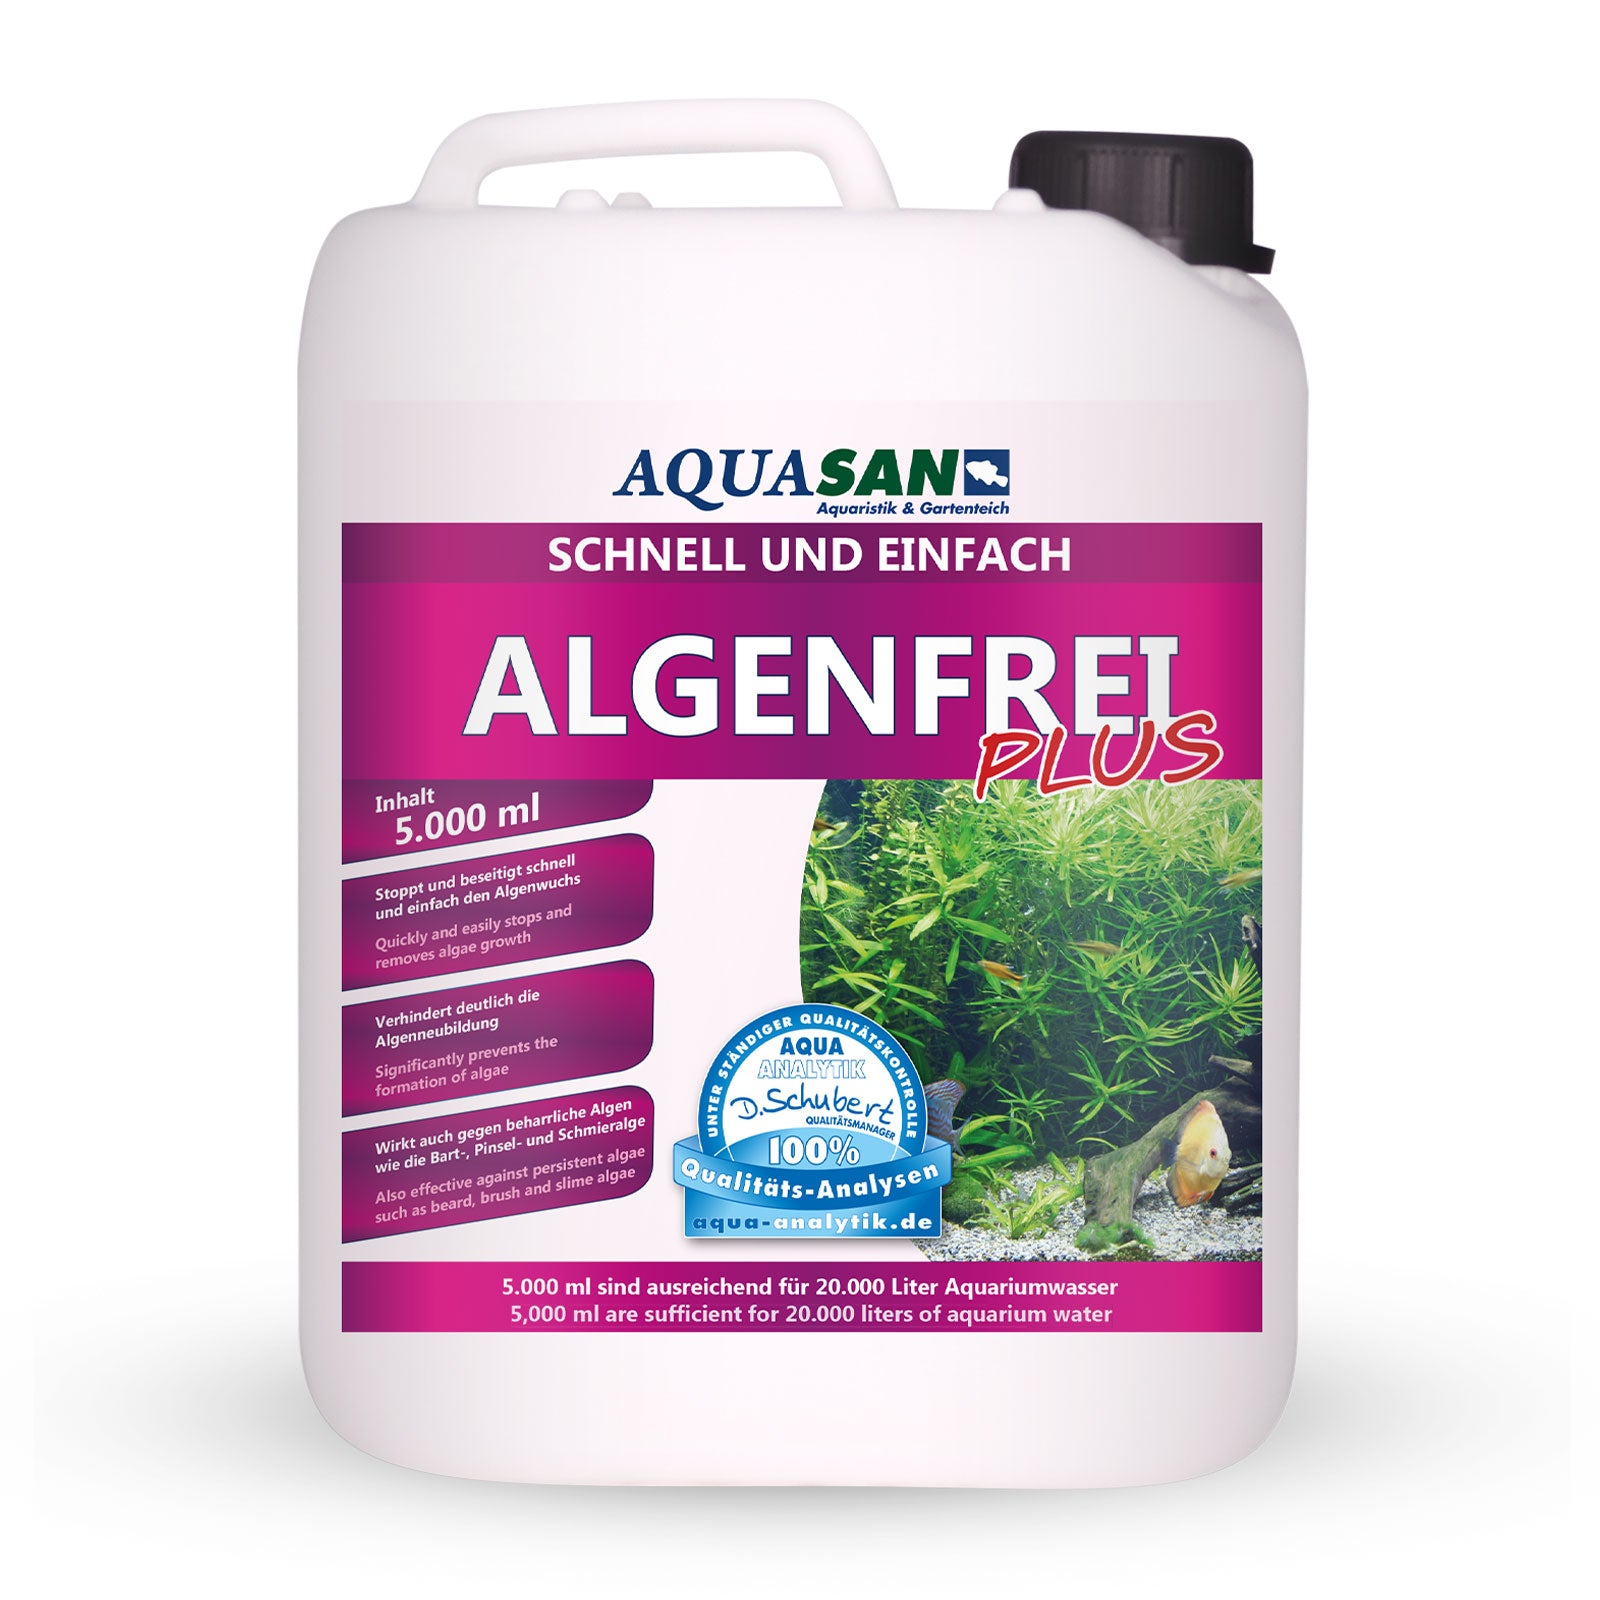 Der Algenfrei Plus 5 ltr Kanister gegen Algen